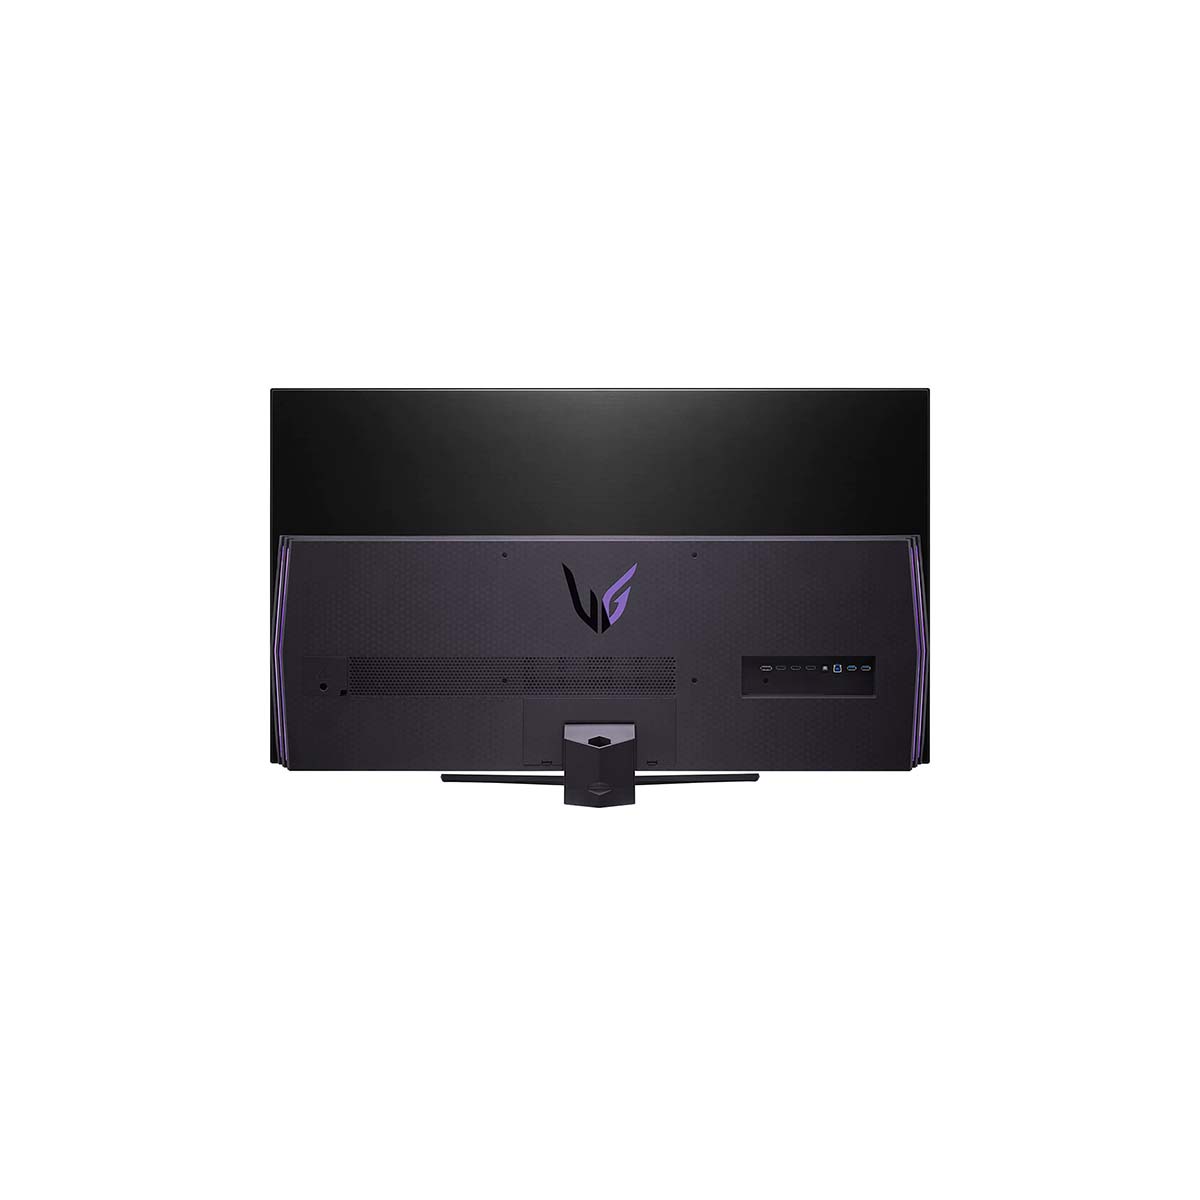 Monitor OLED 48 Gaming UltraGear 120 Hz - 48GQ900-B